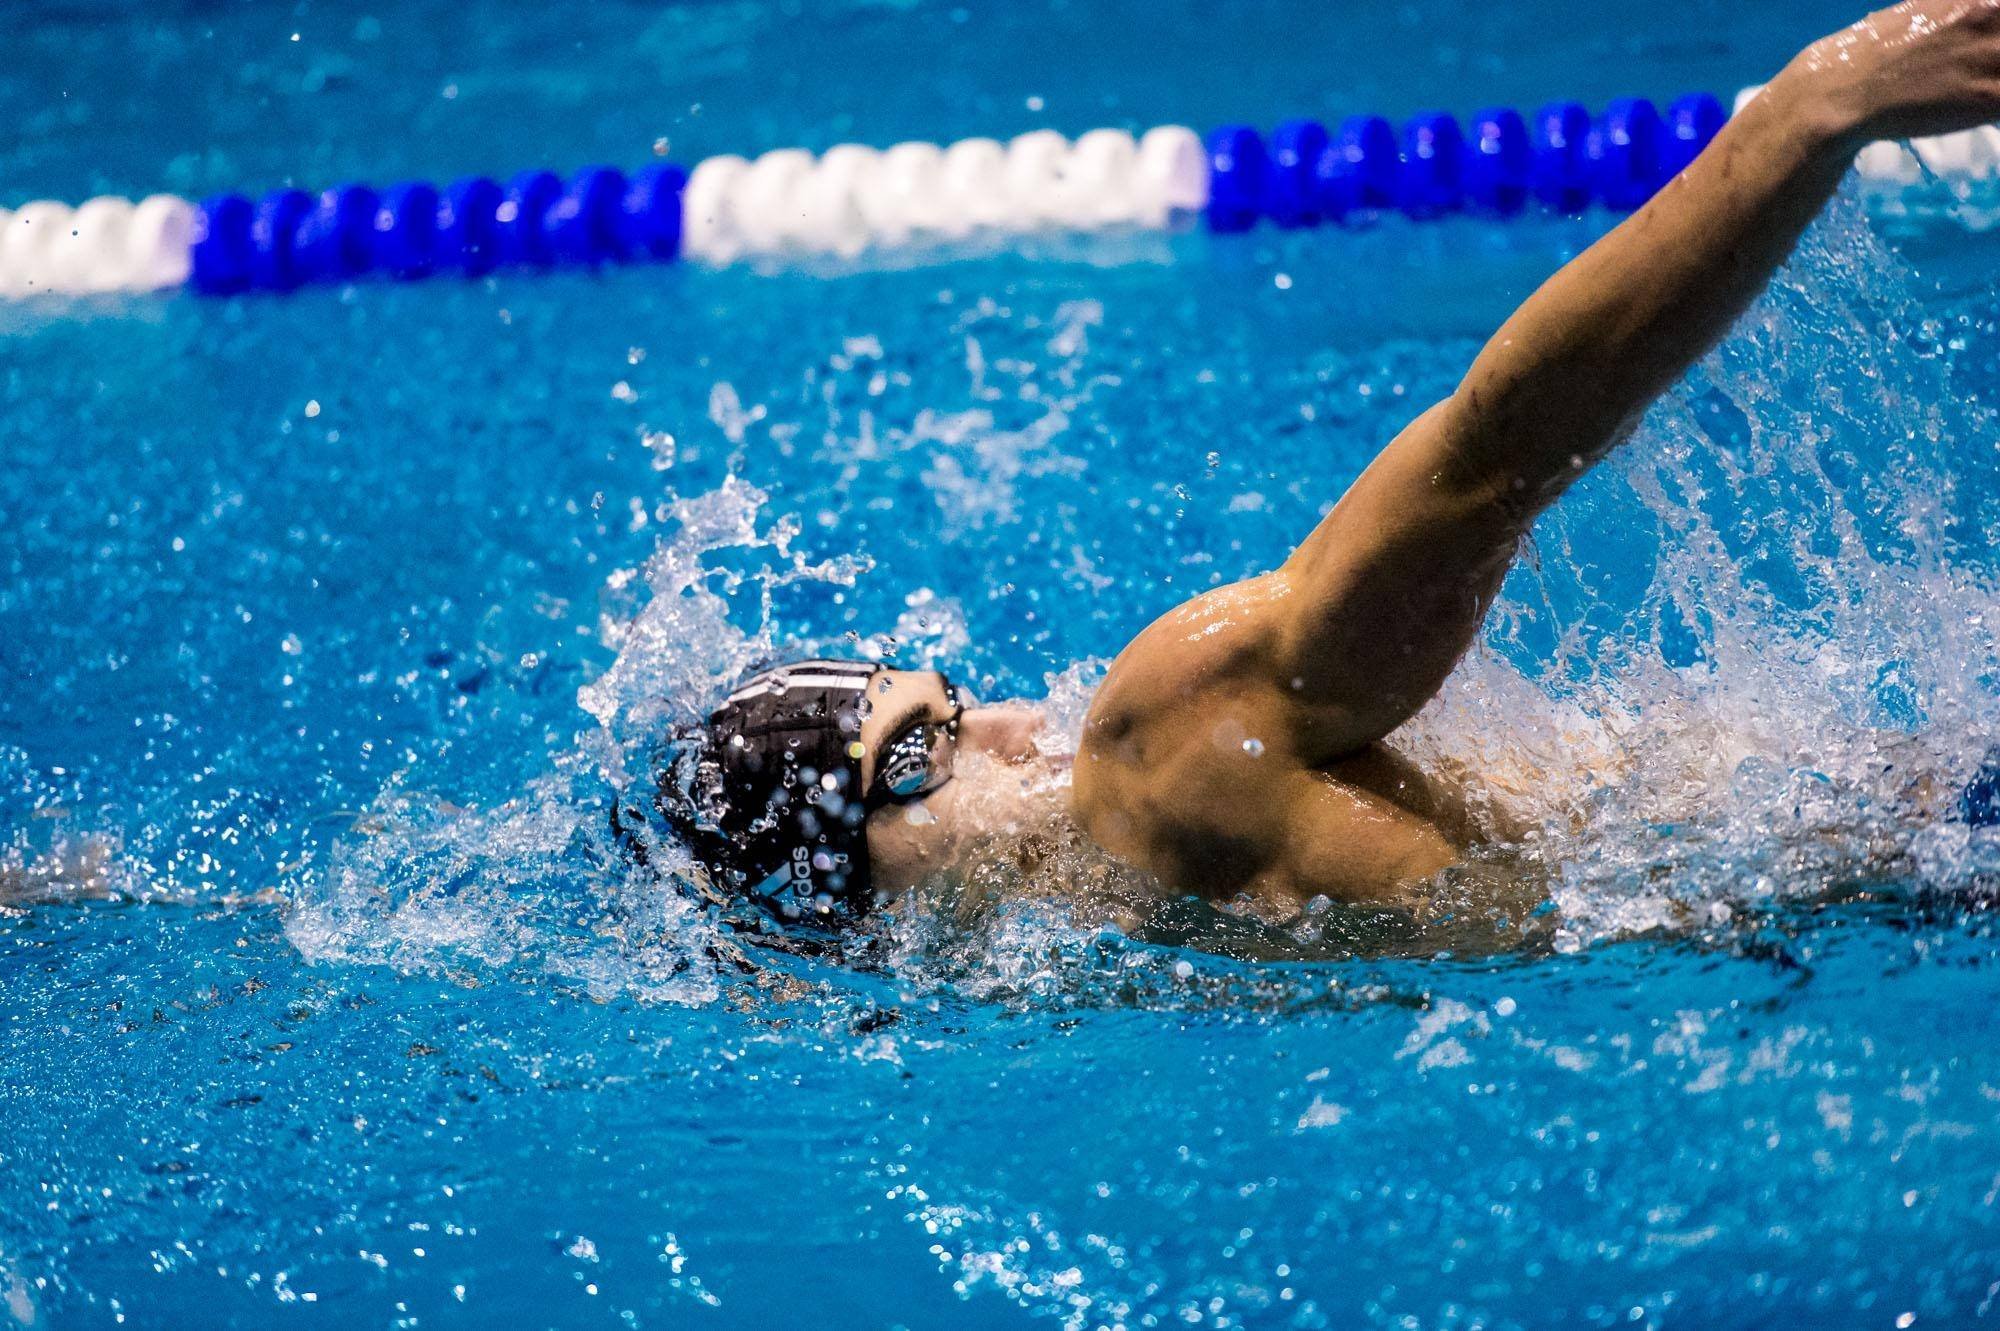 Попов пловец Олимпийский чемпион. Найти спортсмена по плаванию